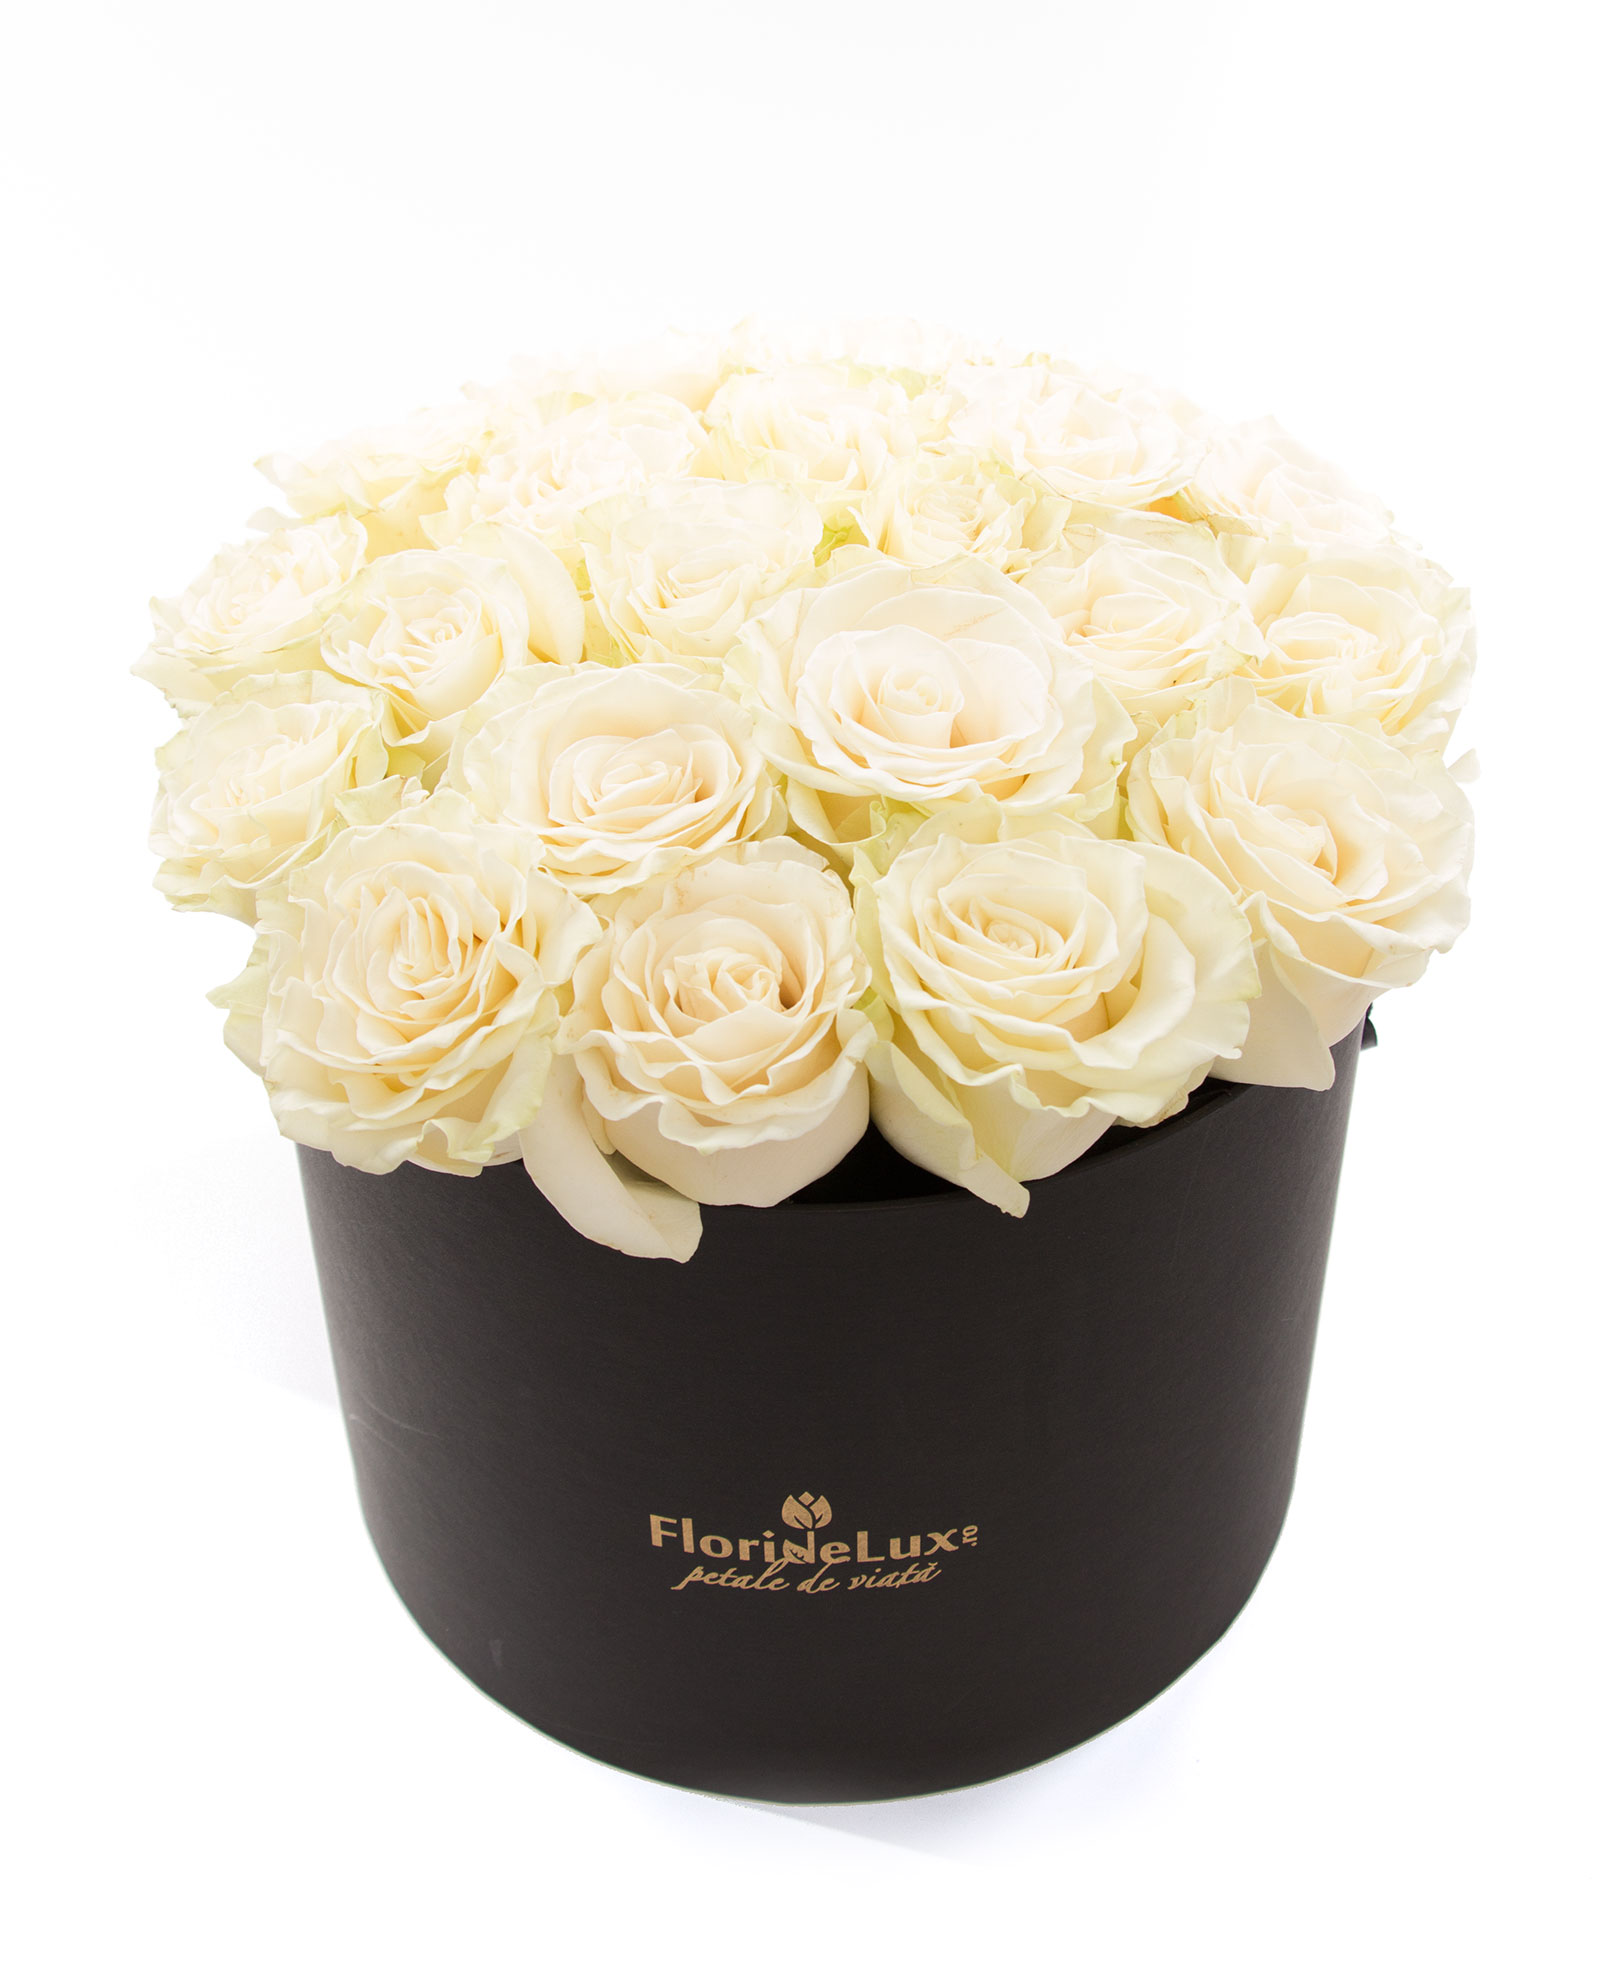 Cutie trandafiri albi Ecuador si Corton Charlemagne